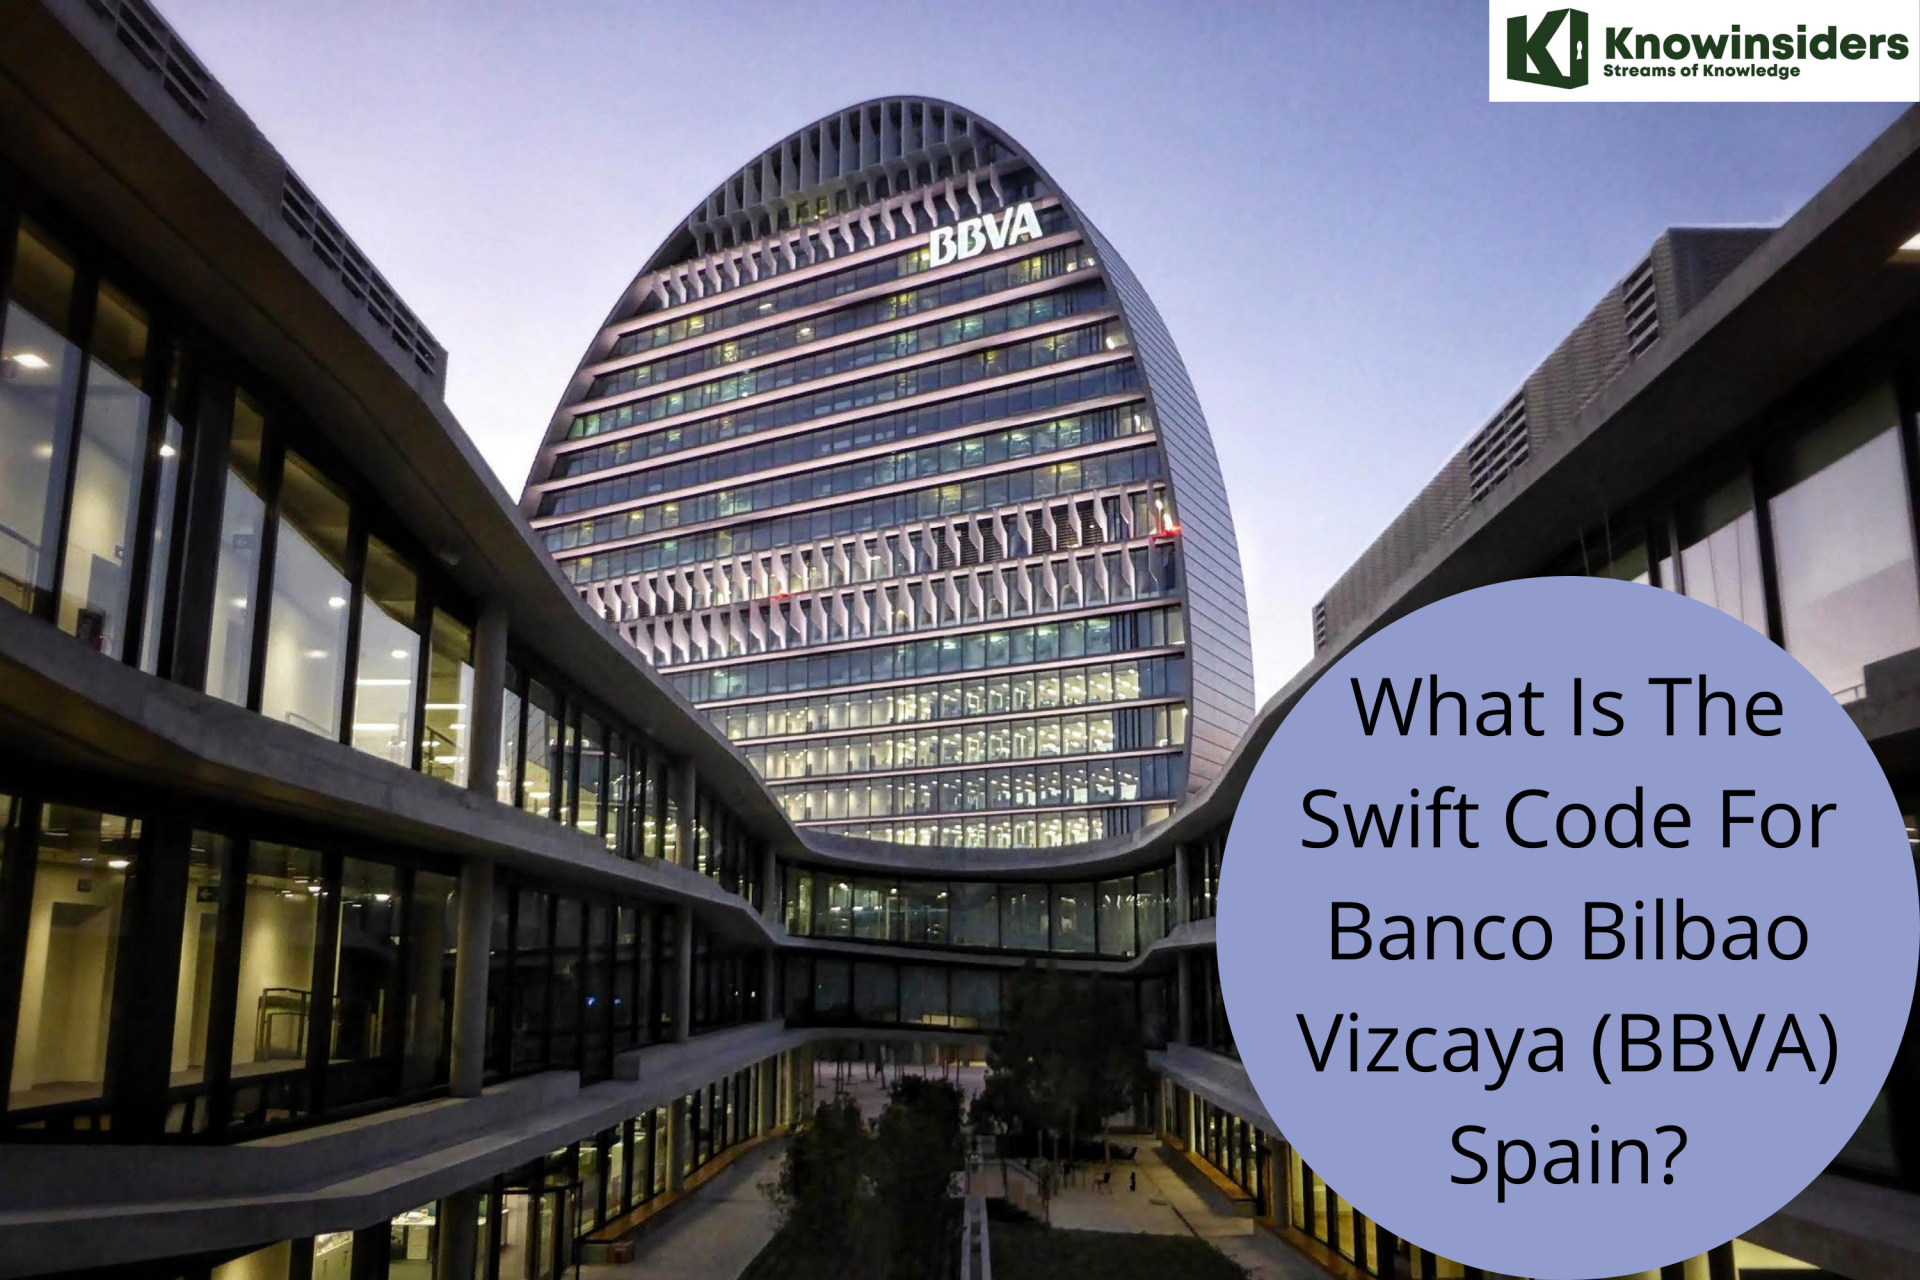 What Is The Swift Code For Banco Bilbao Vizcaya (BBVA) Spain?